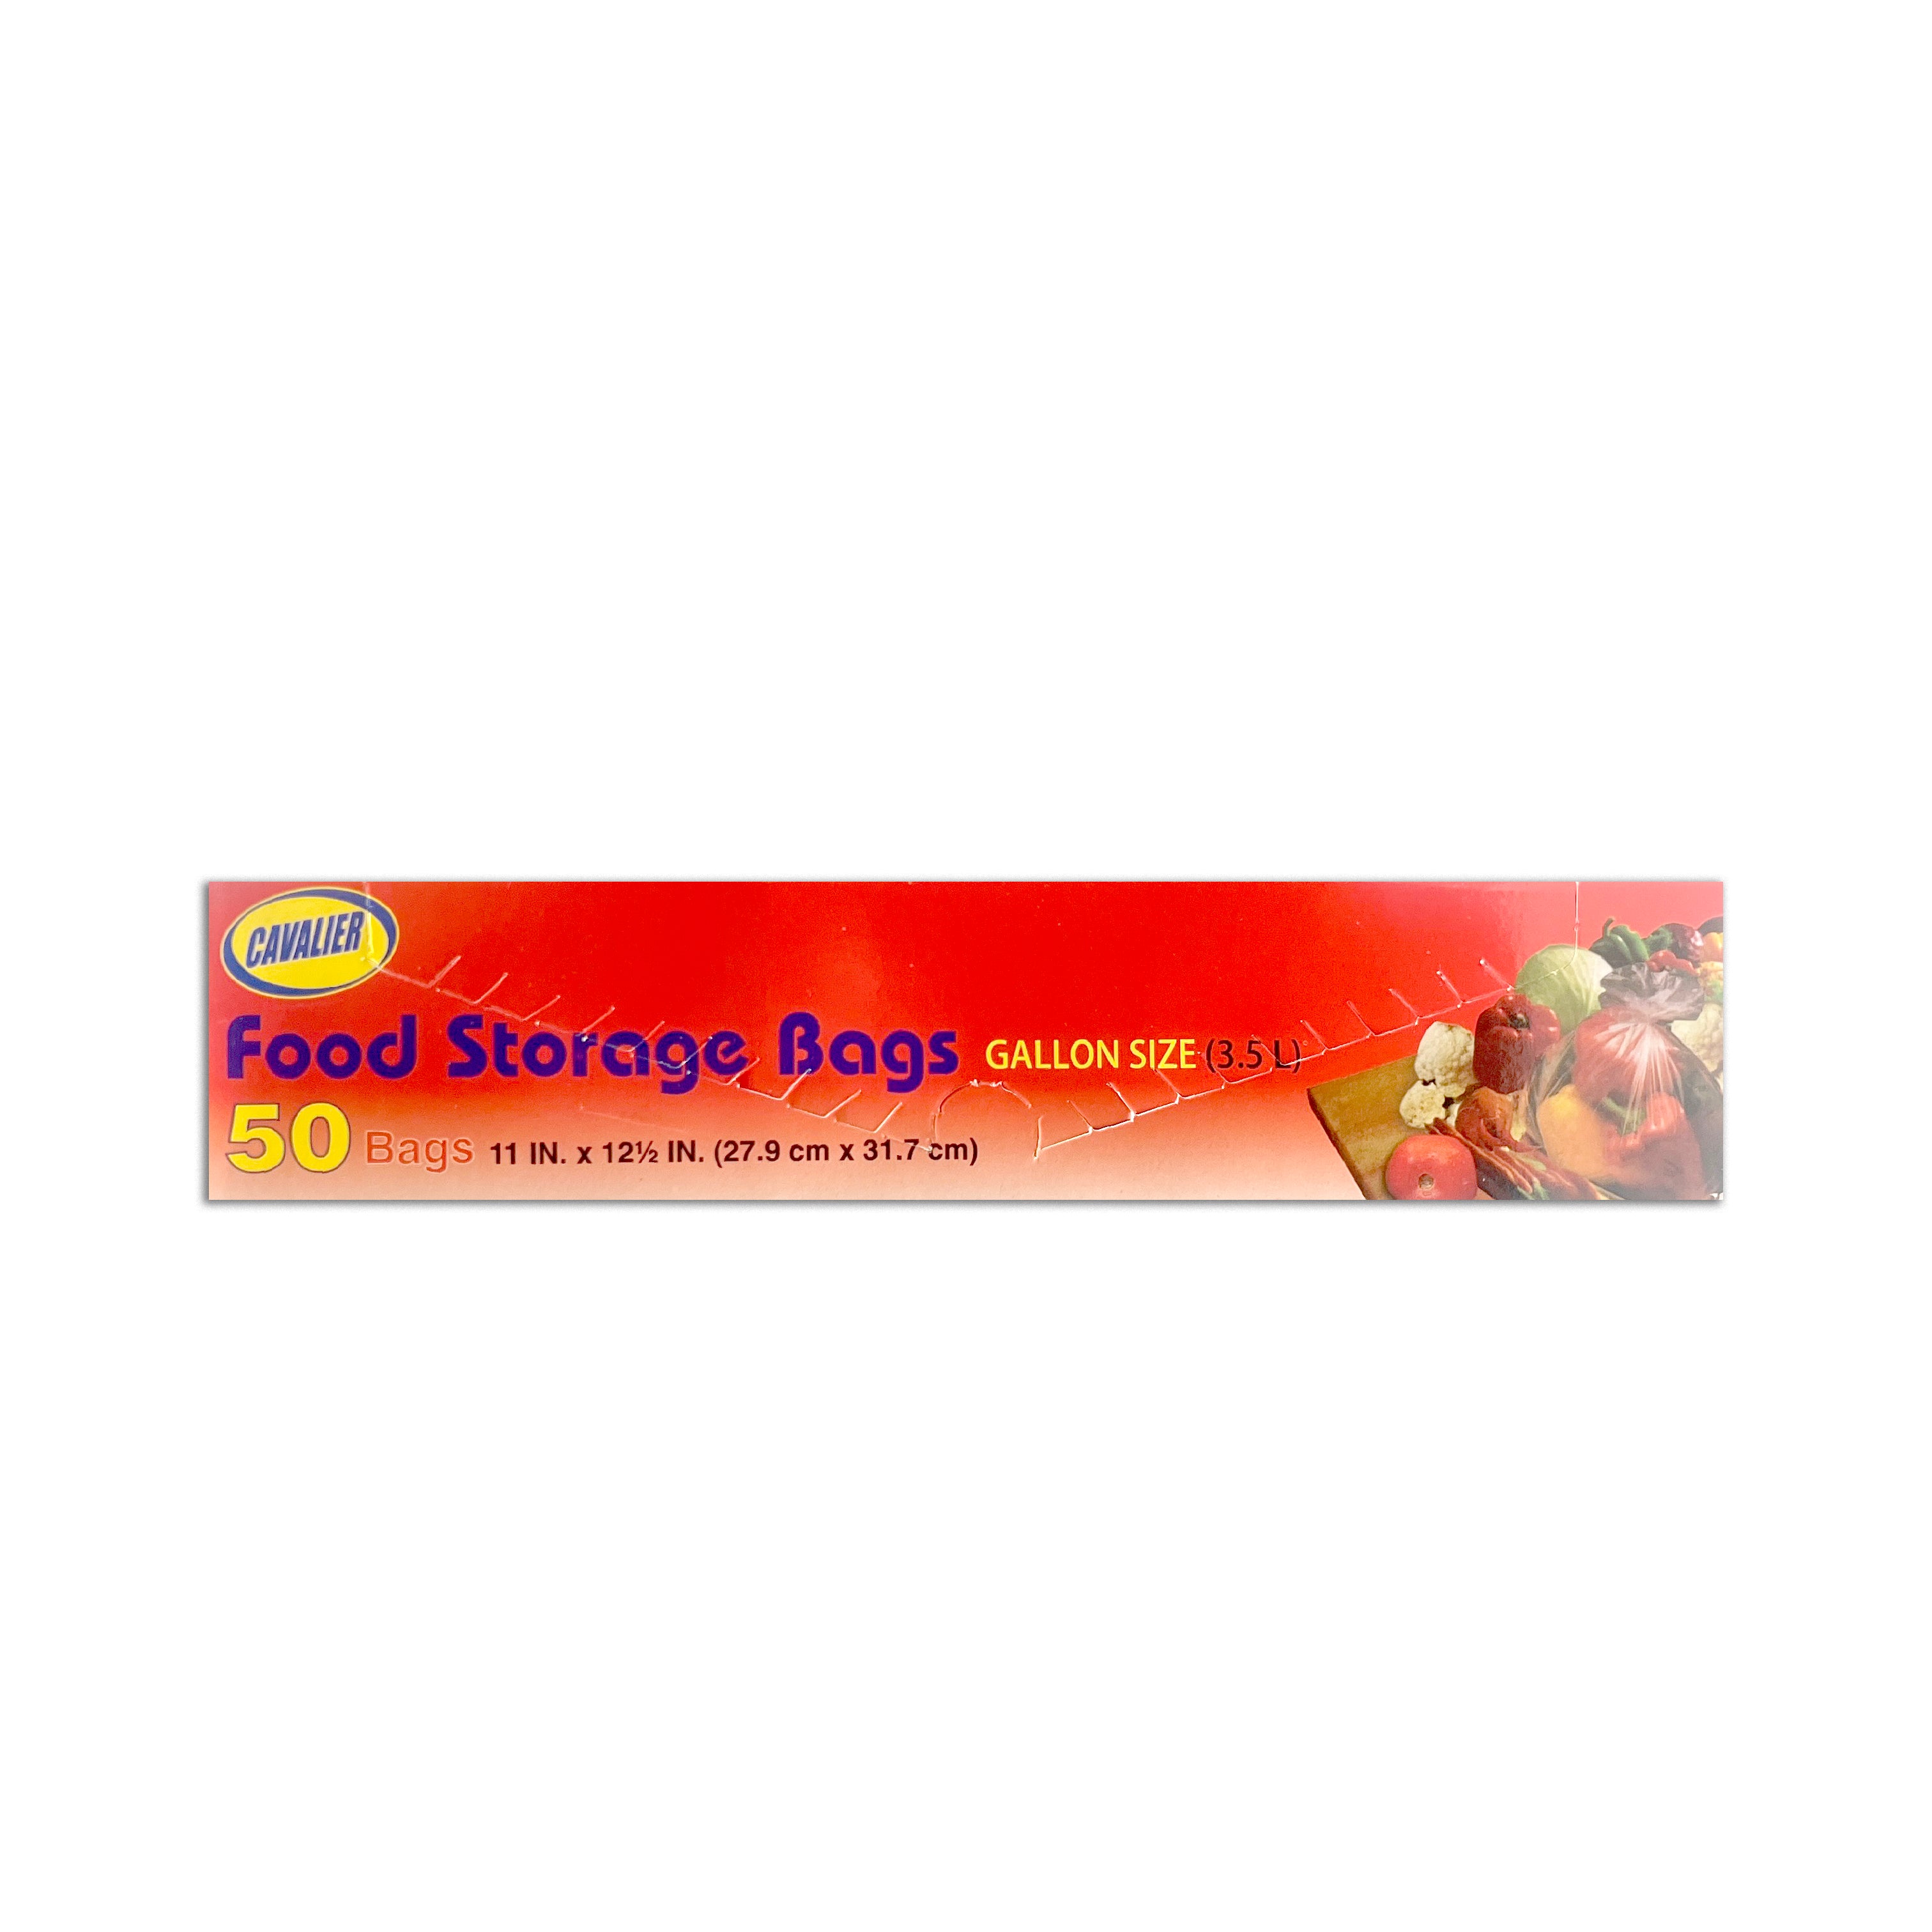 Cavalier Food Storage Bags with Gallon Size 3.5L & 50 Bags (27.9cm x 31.7cm)